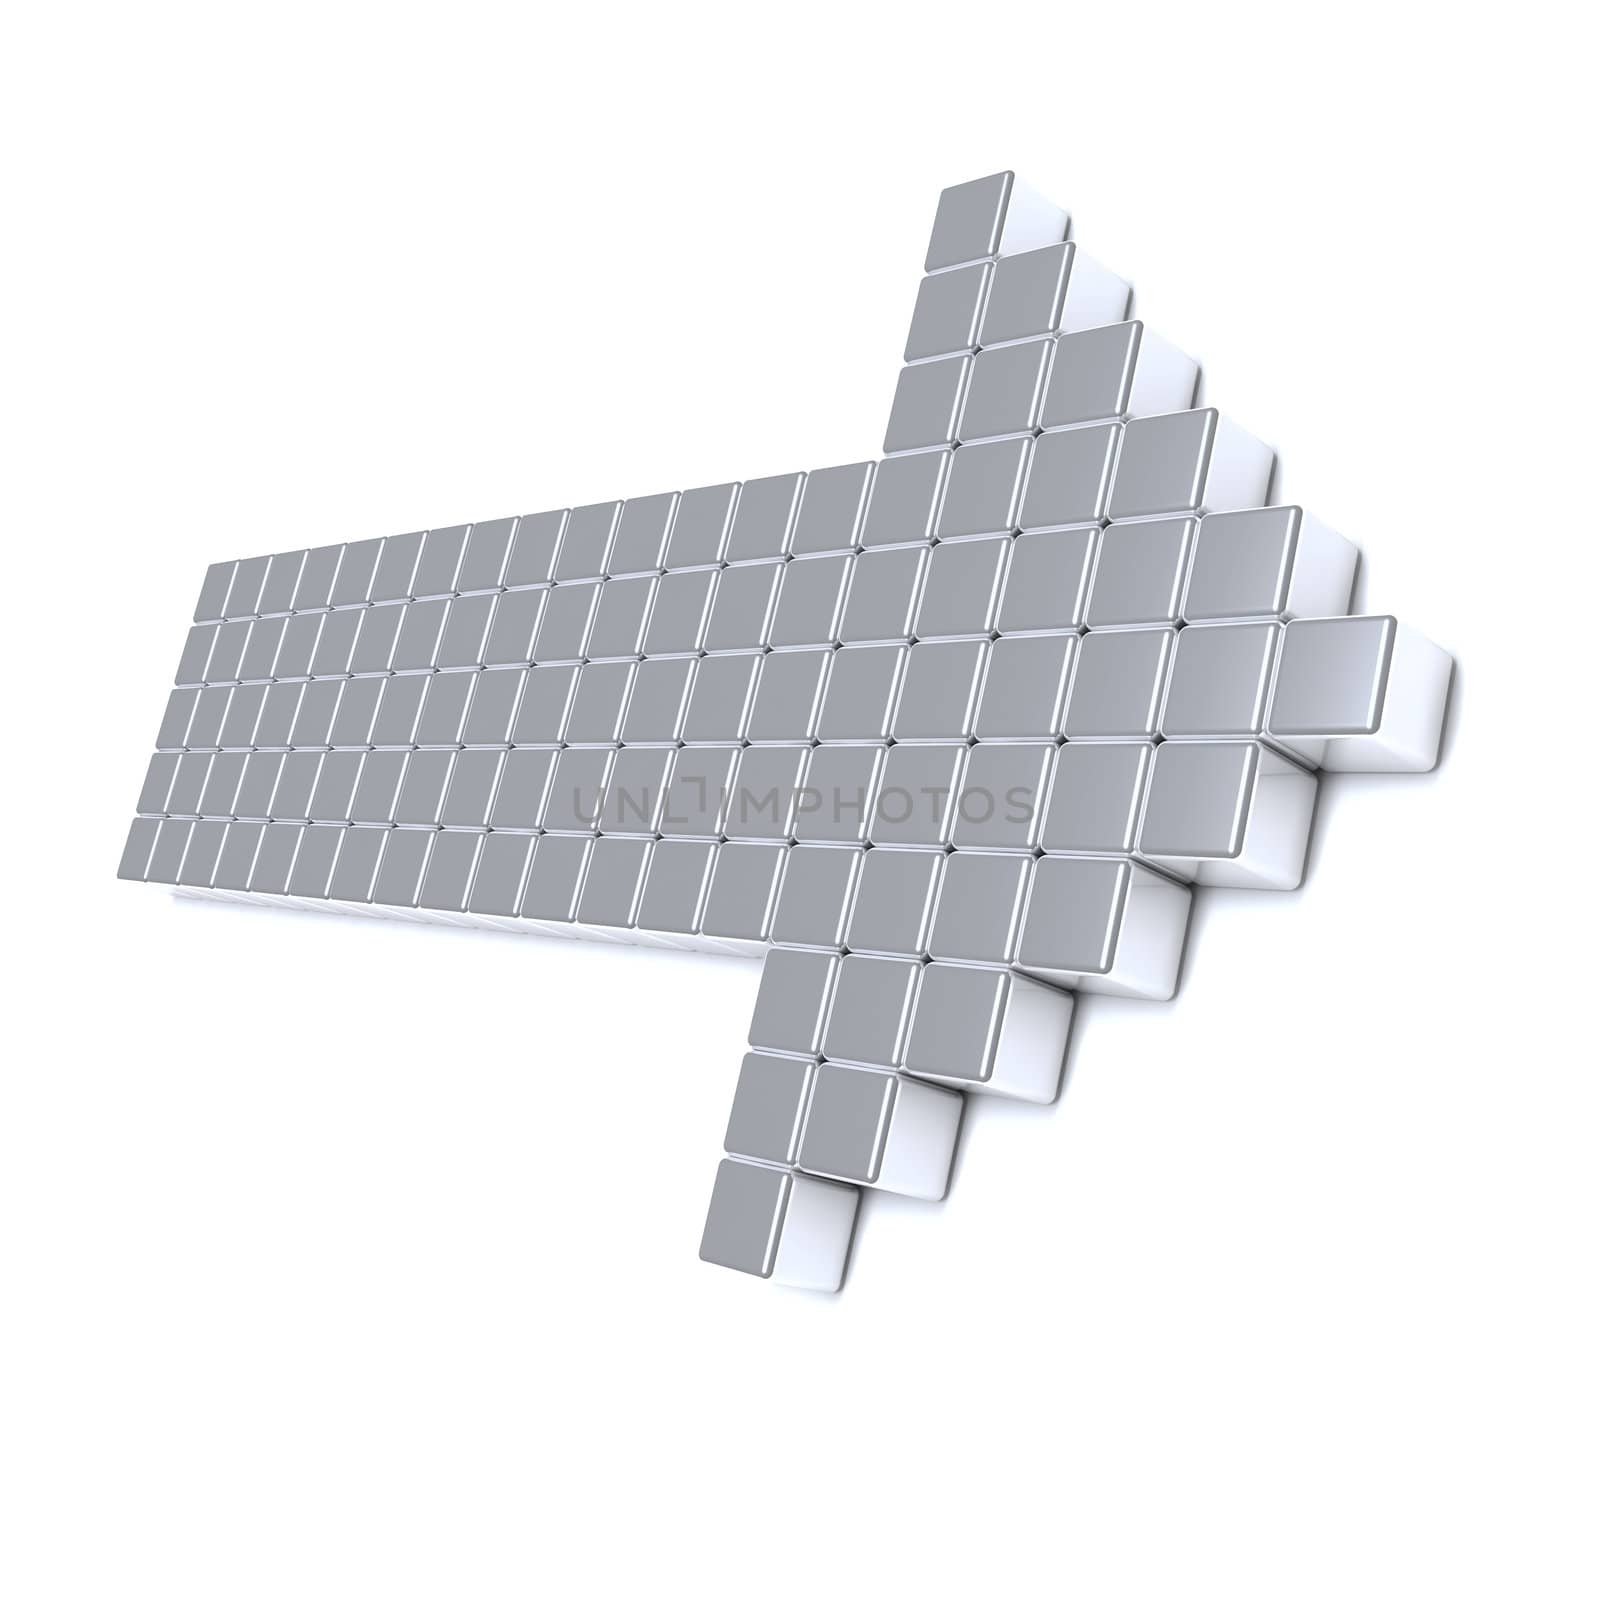 Grey arrow consisting of metal cubes by Serp